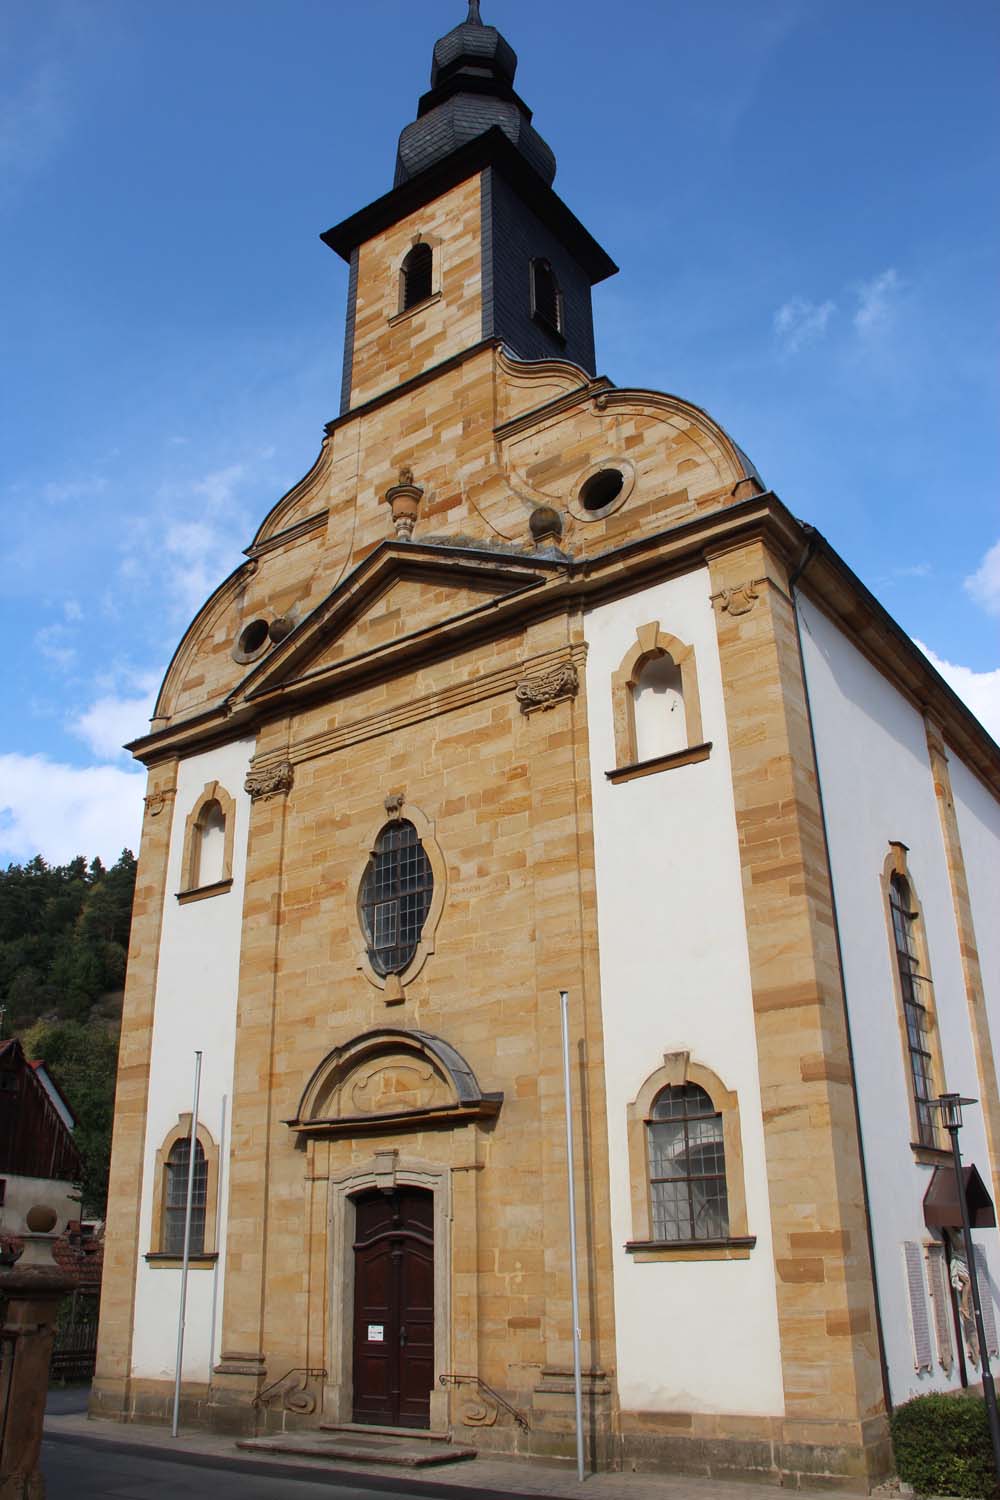 Abb. 15b: Fassade der Pfarrkirche